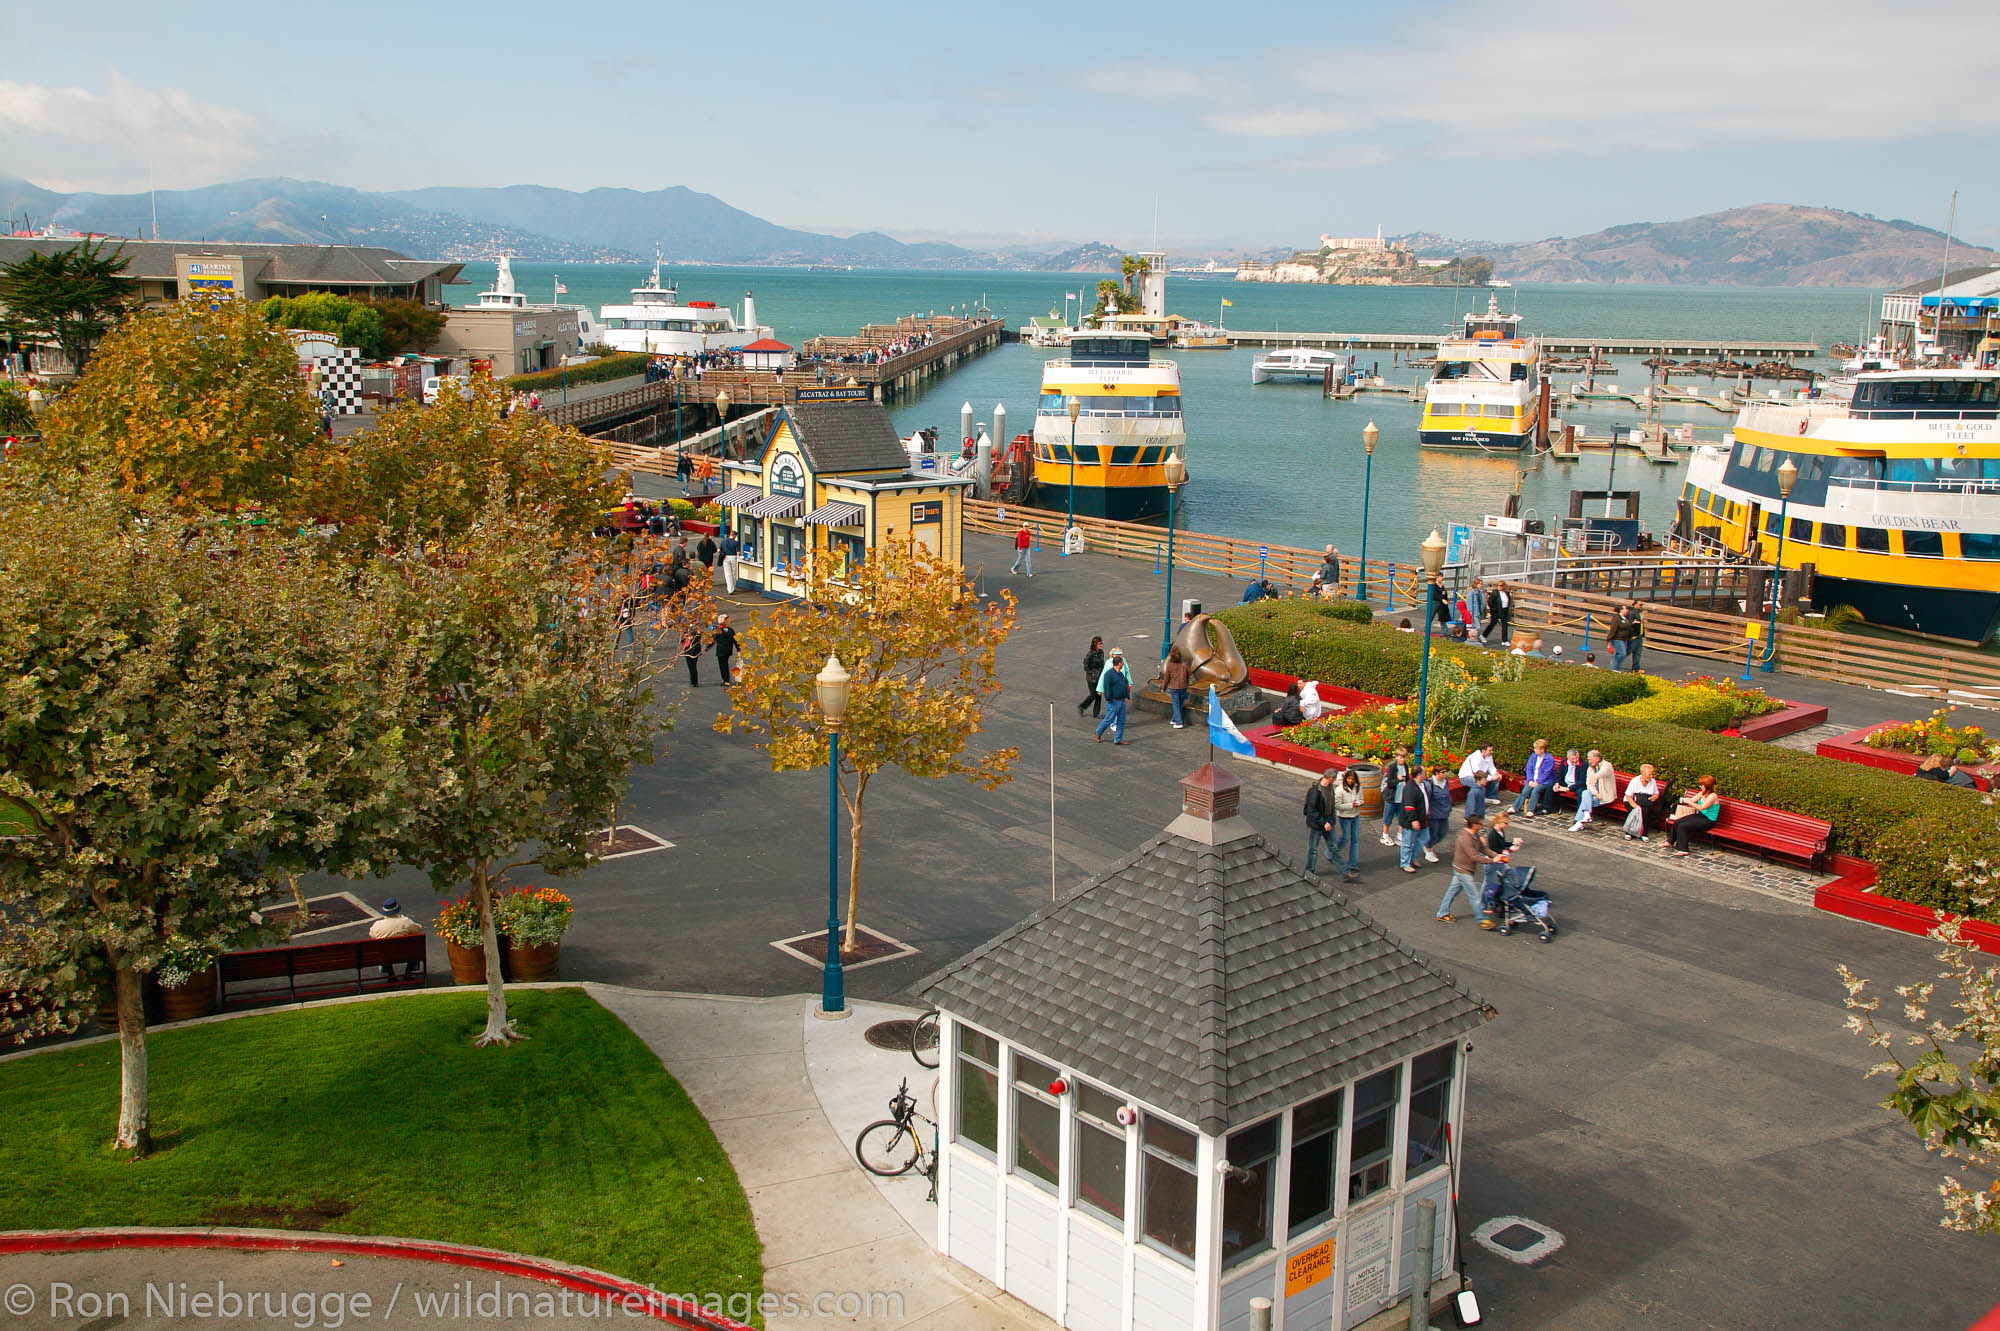 Pier 39 and Fisherman's Wharf, San Francisco, California.